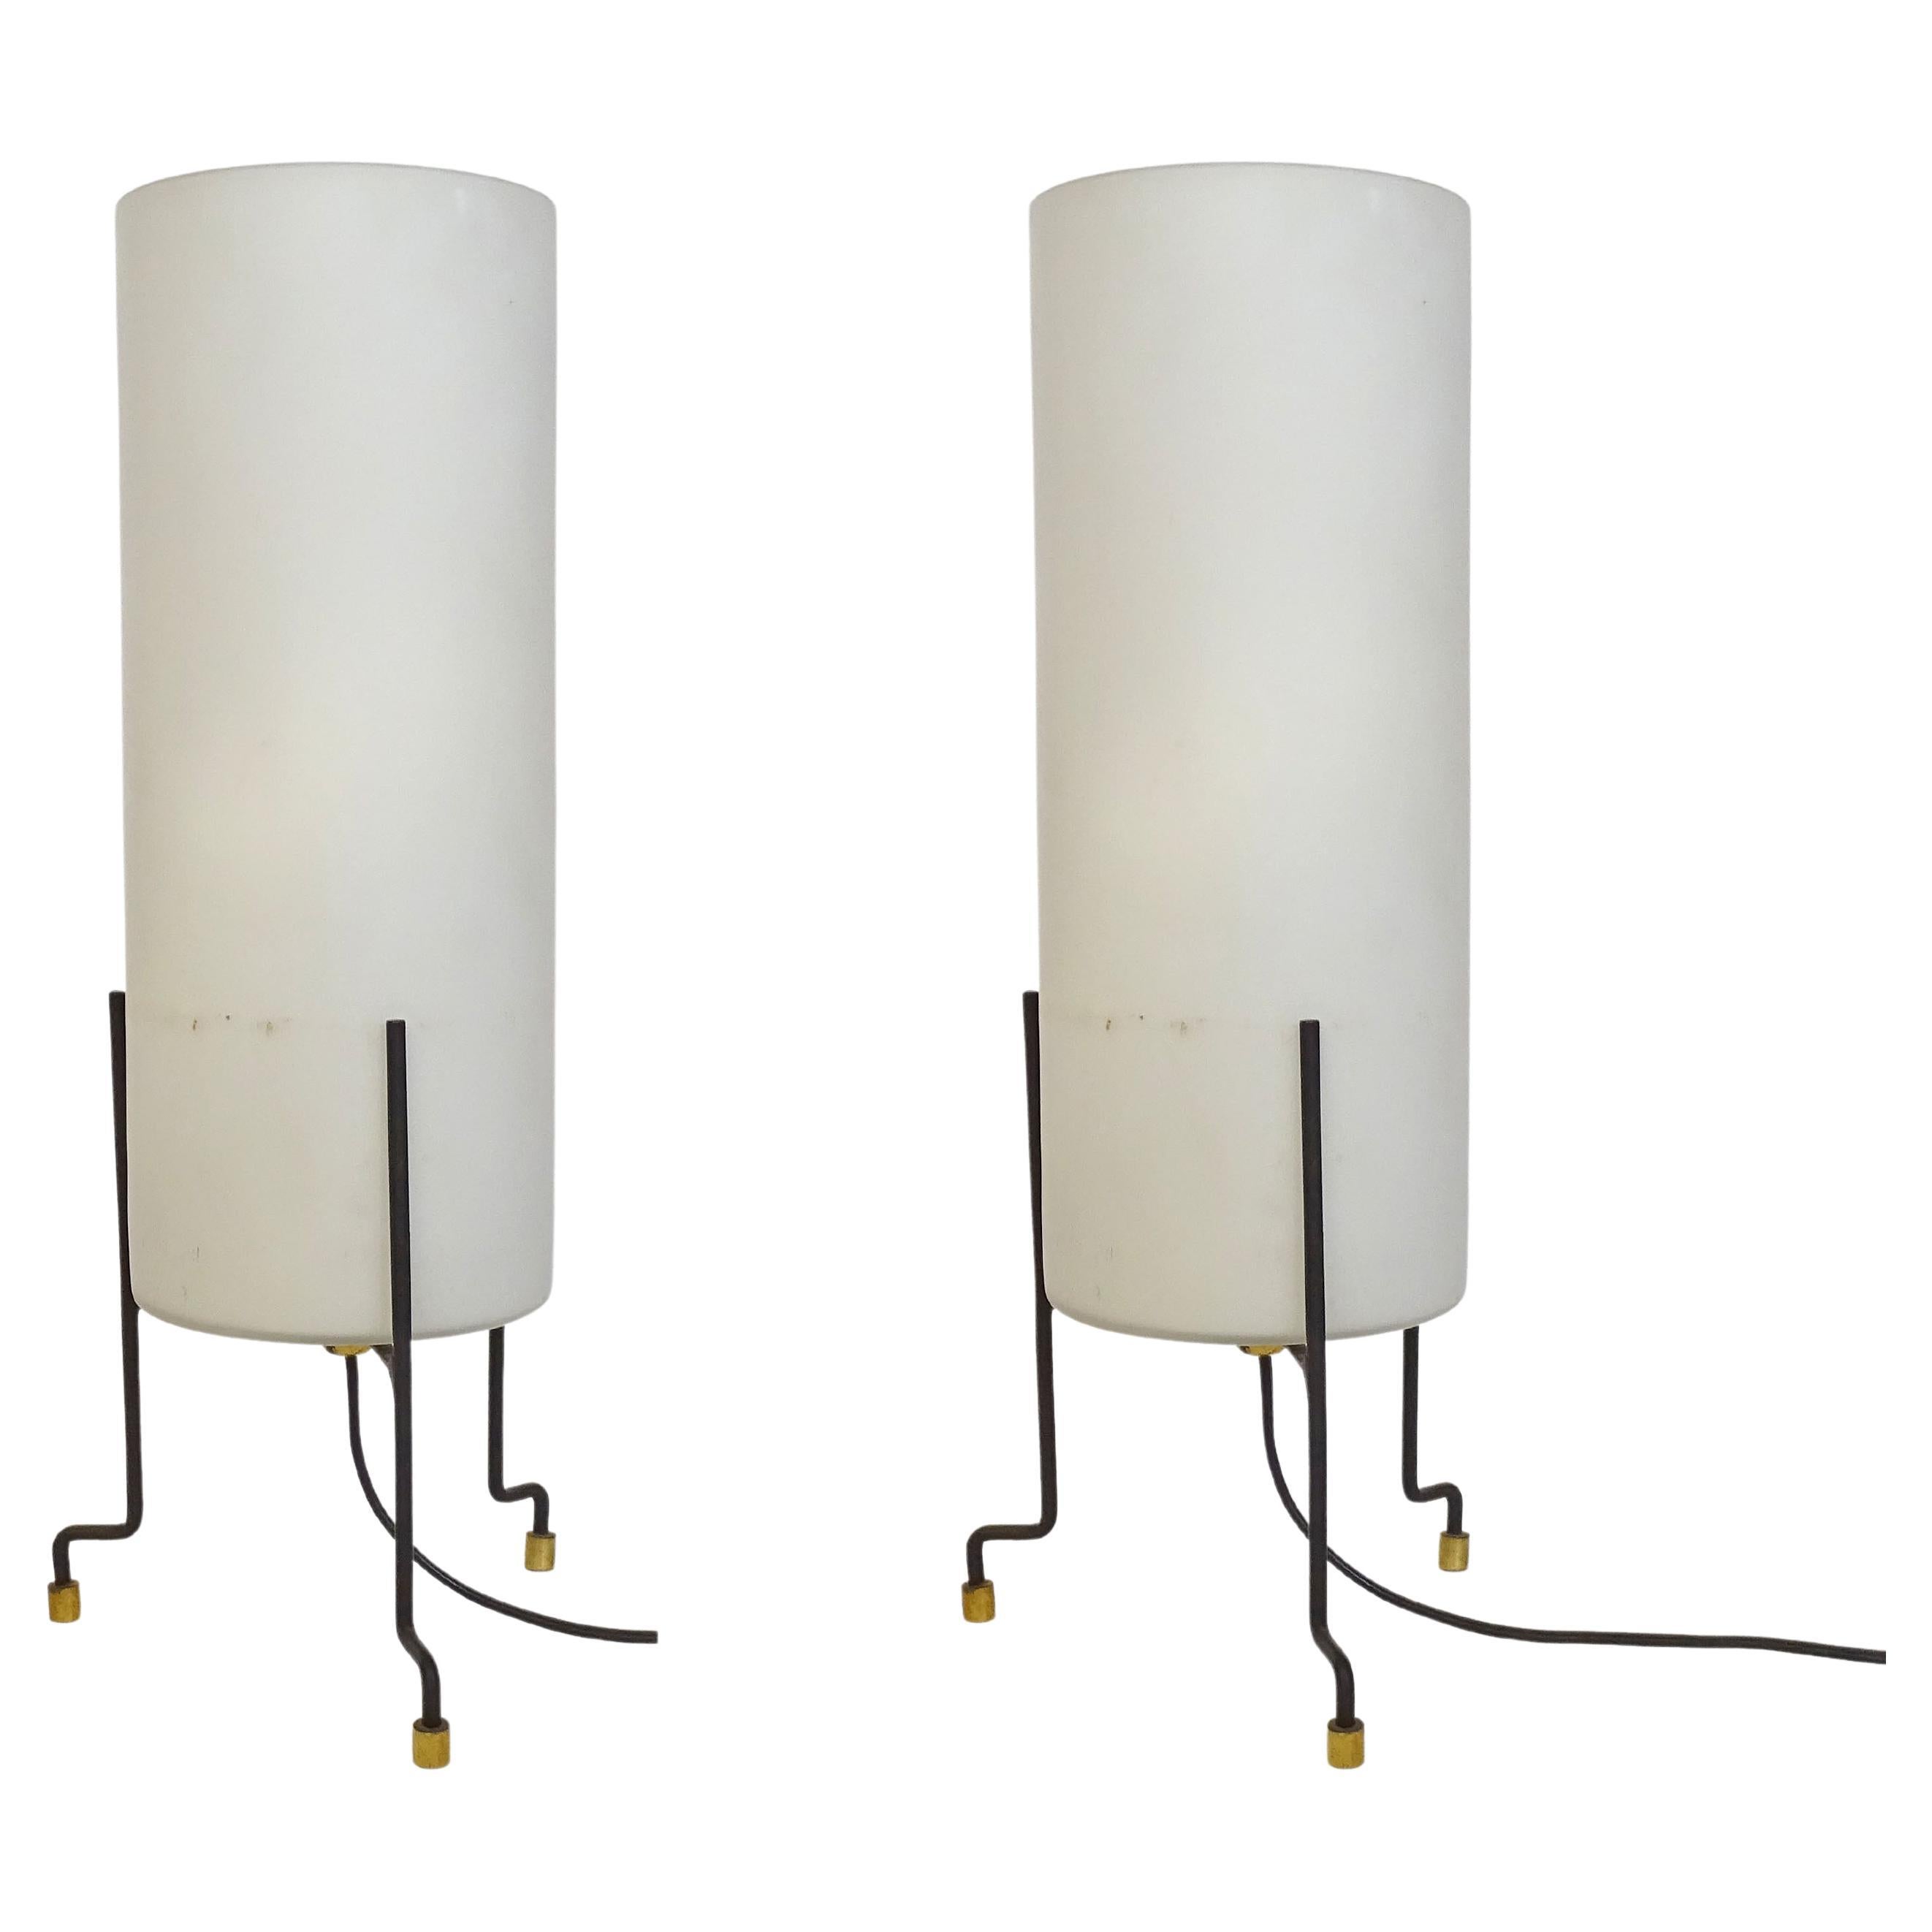 Splendid pair of Italian 1950s minimalistic table lamps.